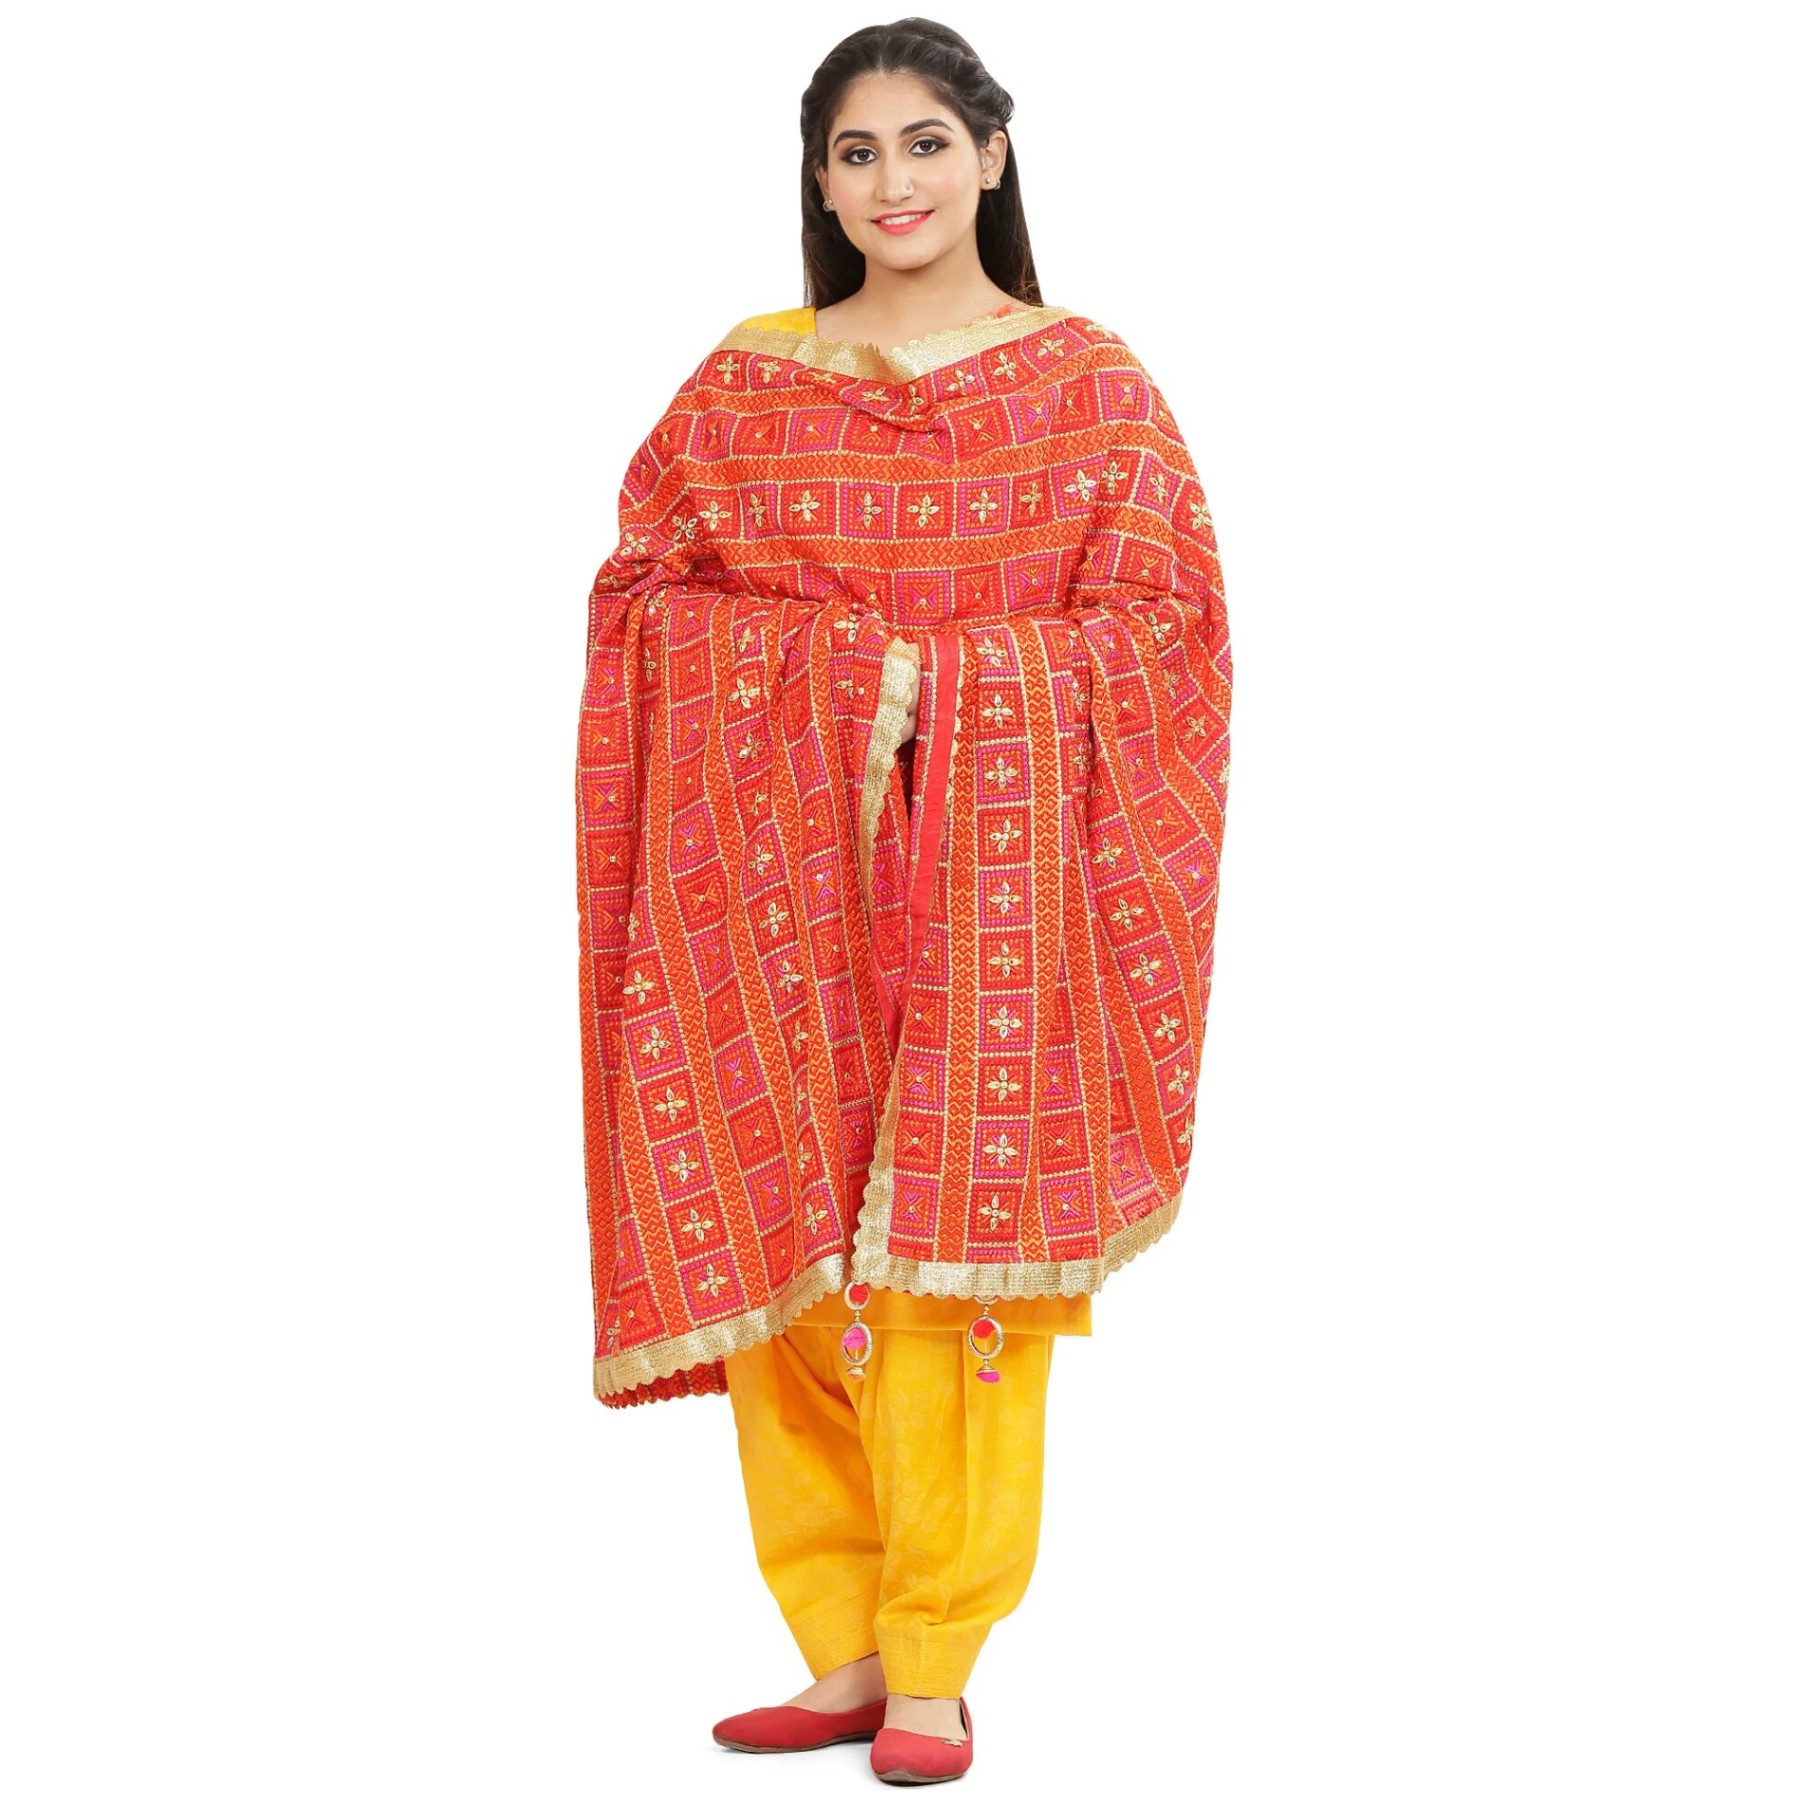 Salwar Kurta, Sari, Other traditional costume on sale